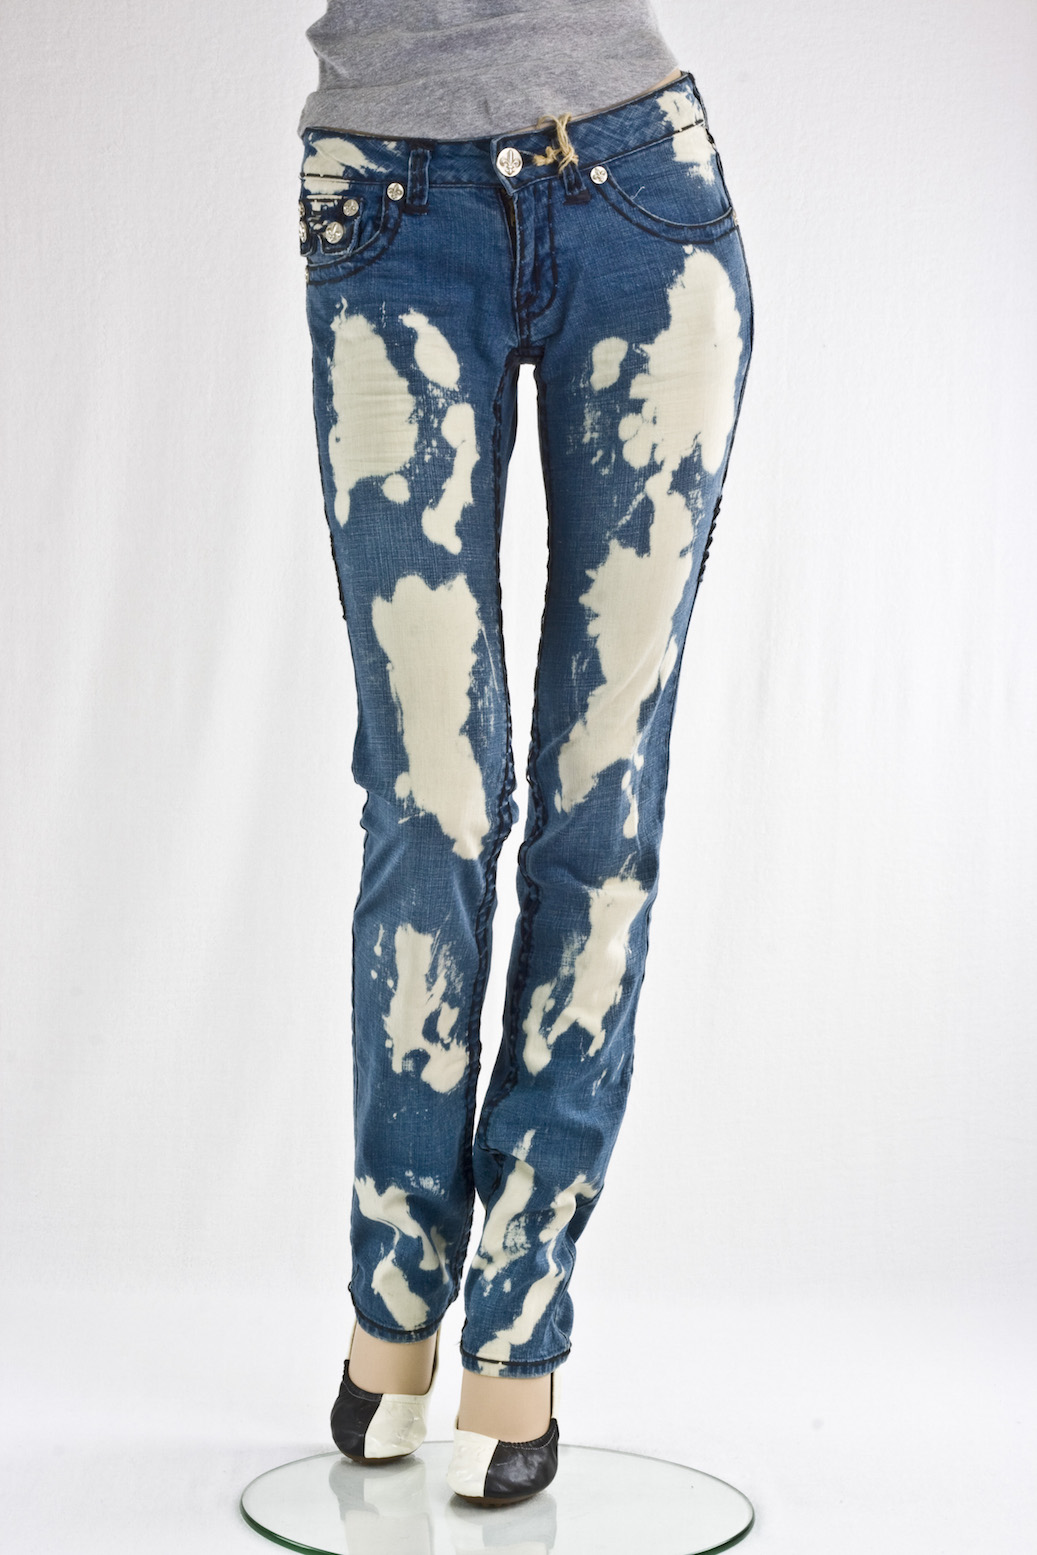 Женские джинсы Laguna Beach "Скини" Hermosa Beach Medium Blue Burn Out Denim интернет-магазин Fashion Jeans